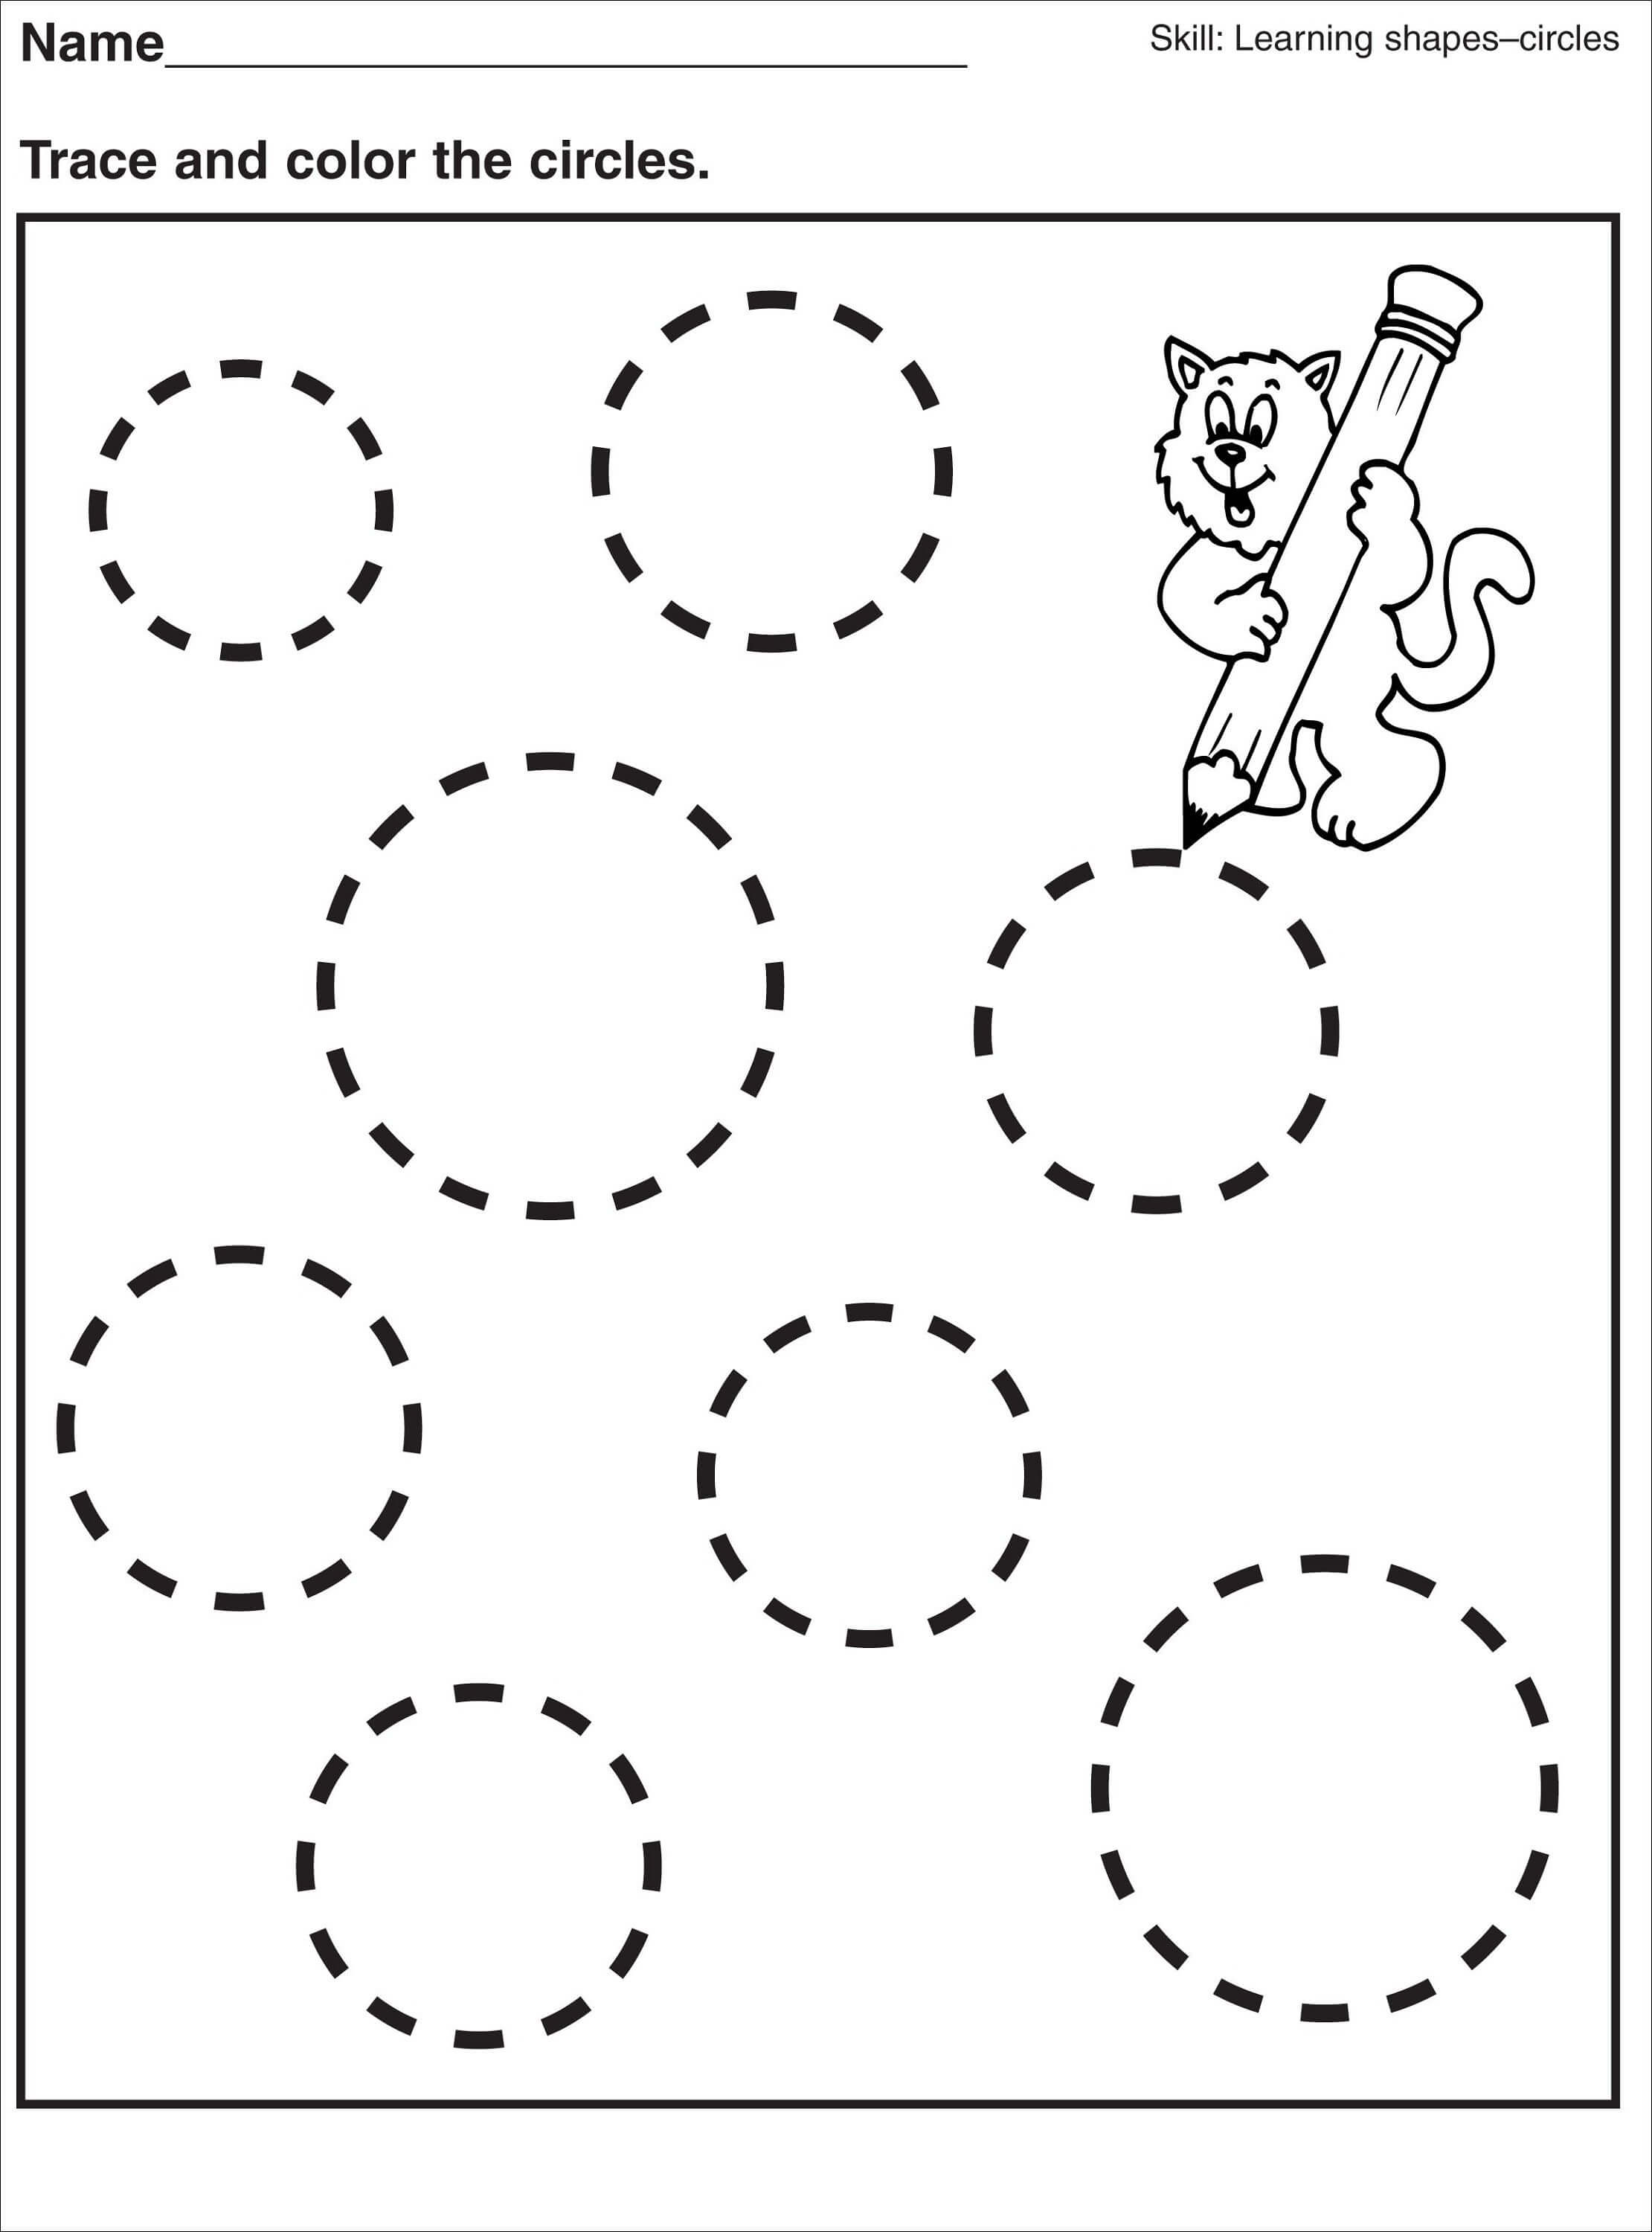 Preschool Tracing Pages Circles